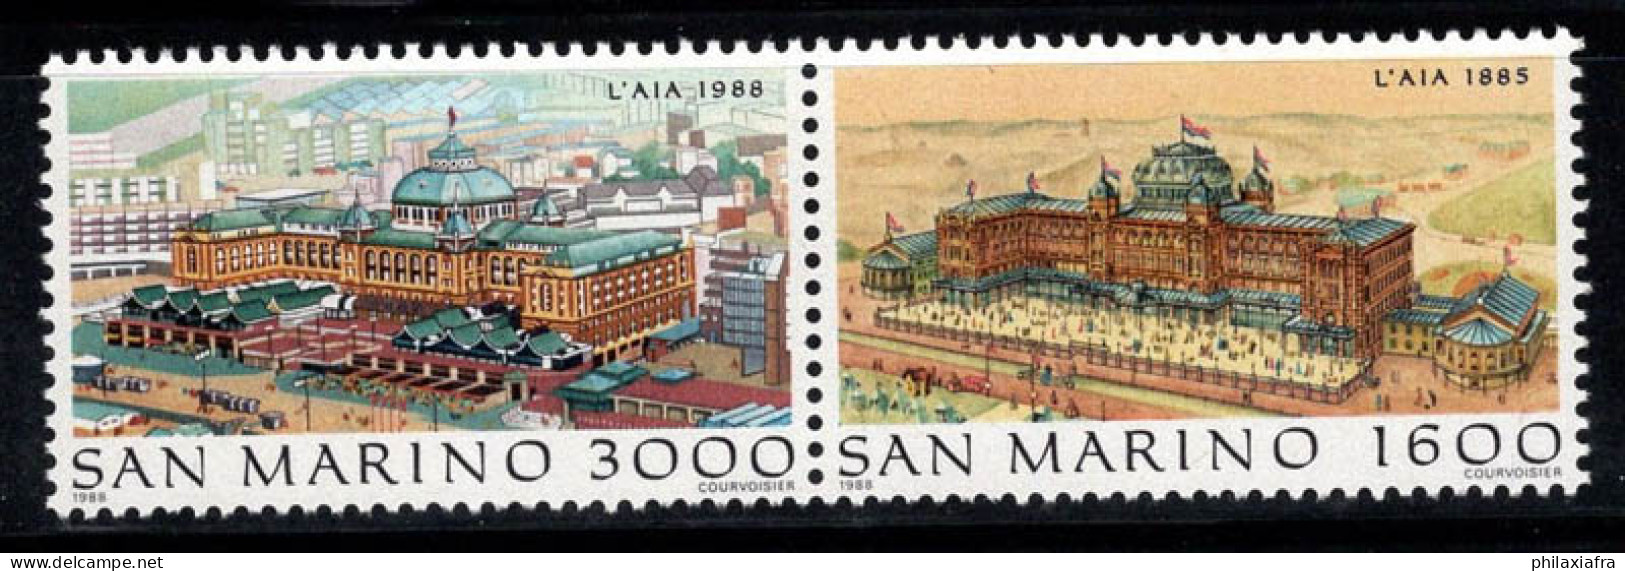 Saint-Marin 1983 Sass. 1243-1244 Neuf ** 100% Ville, Places - Unused Stamps